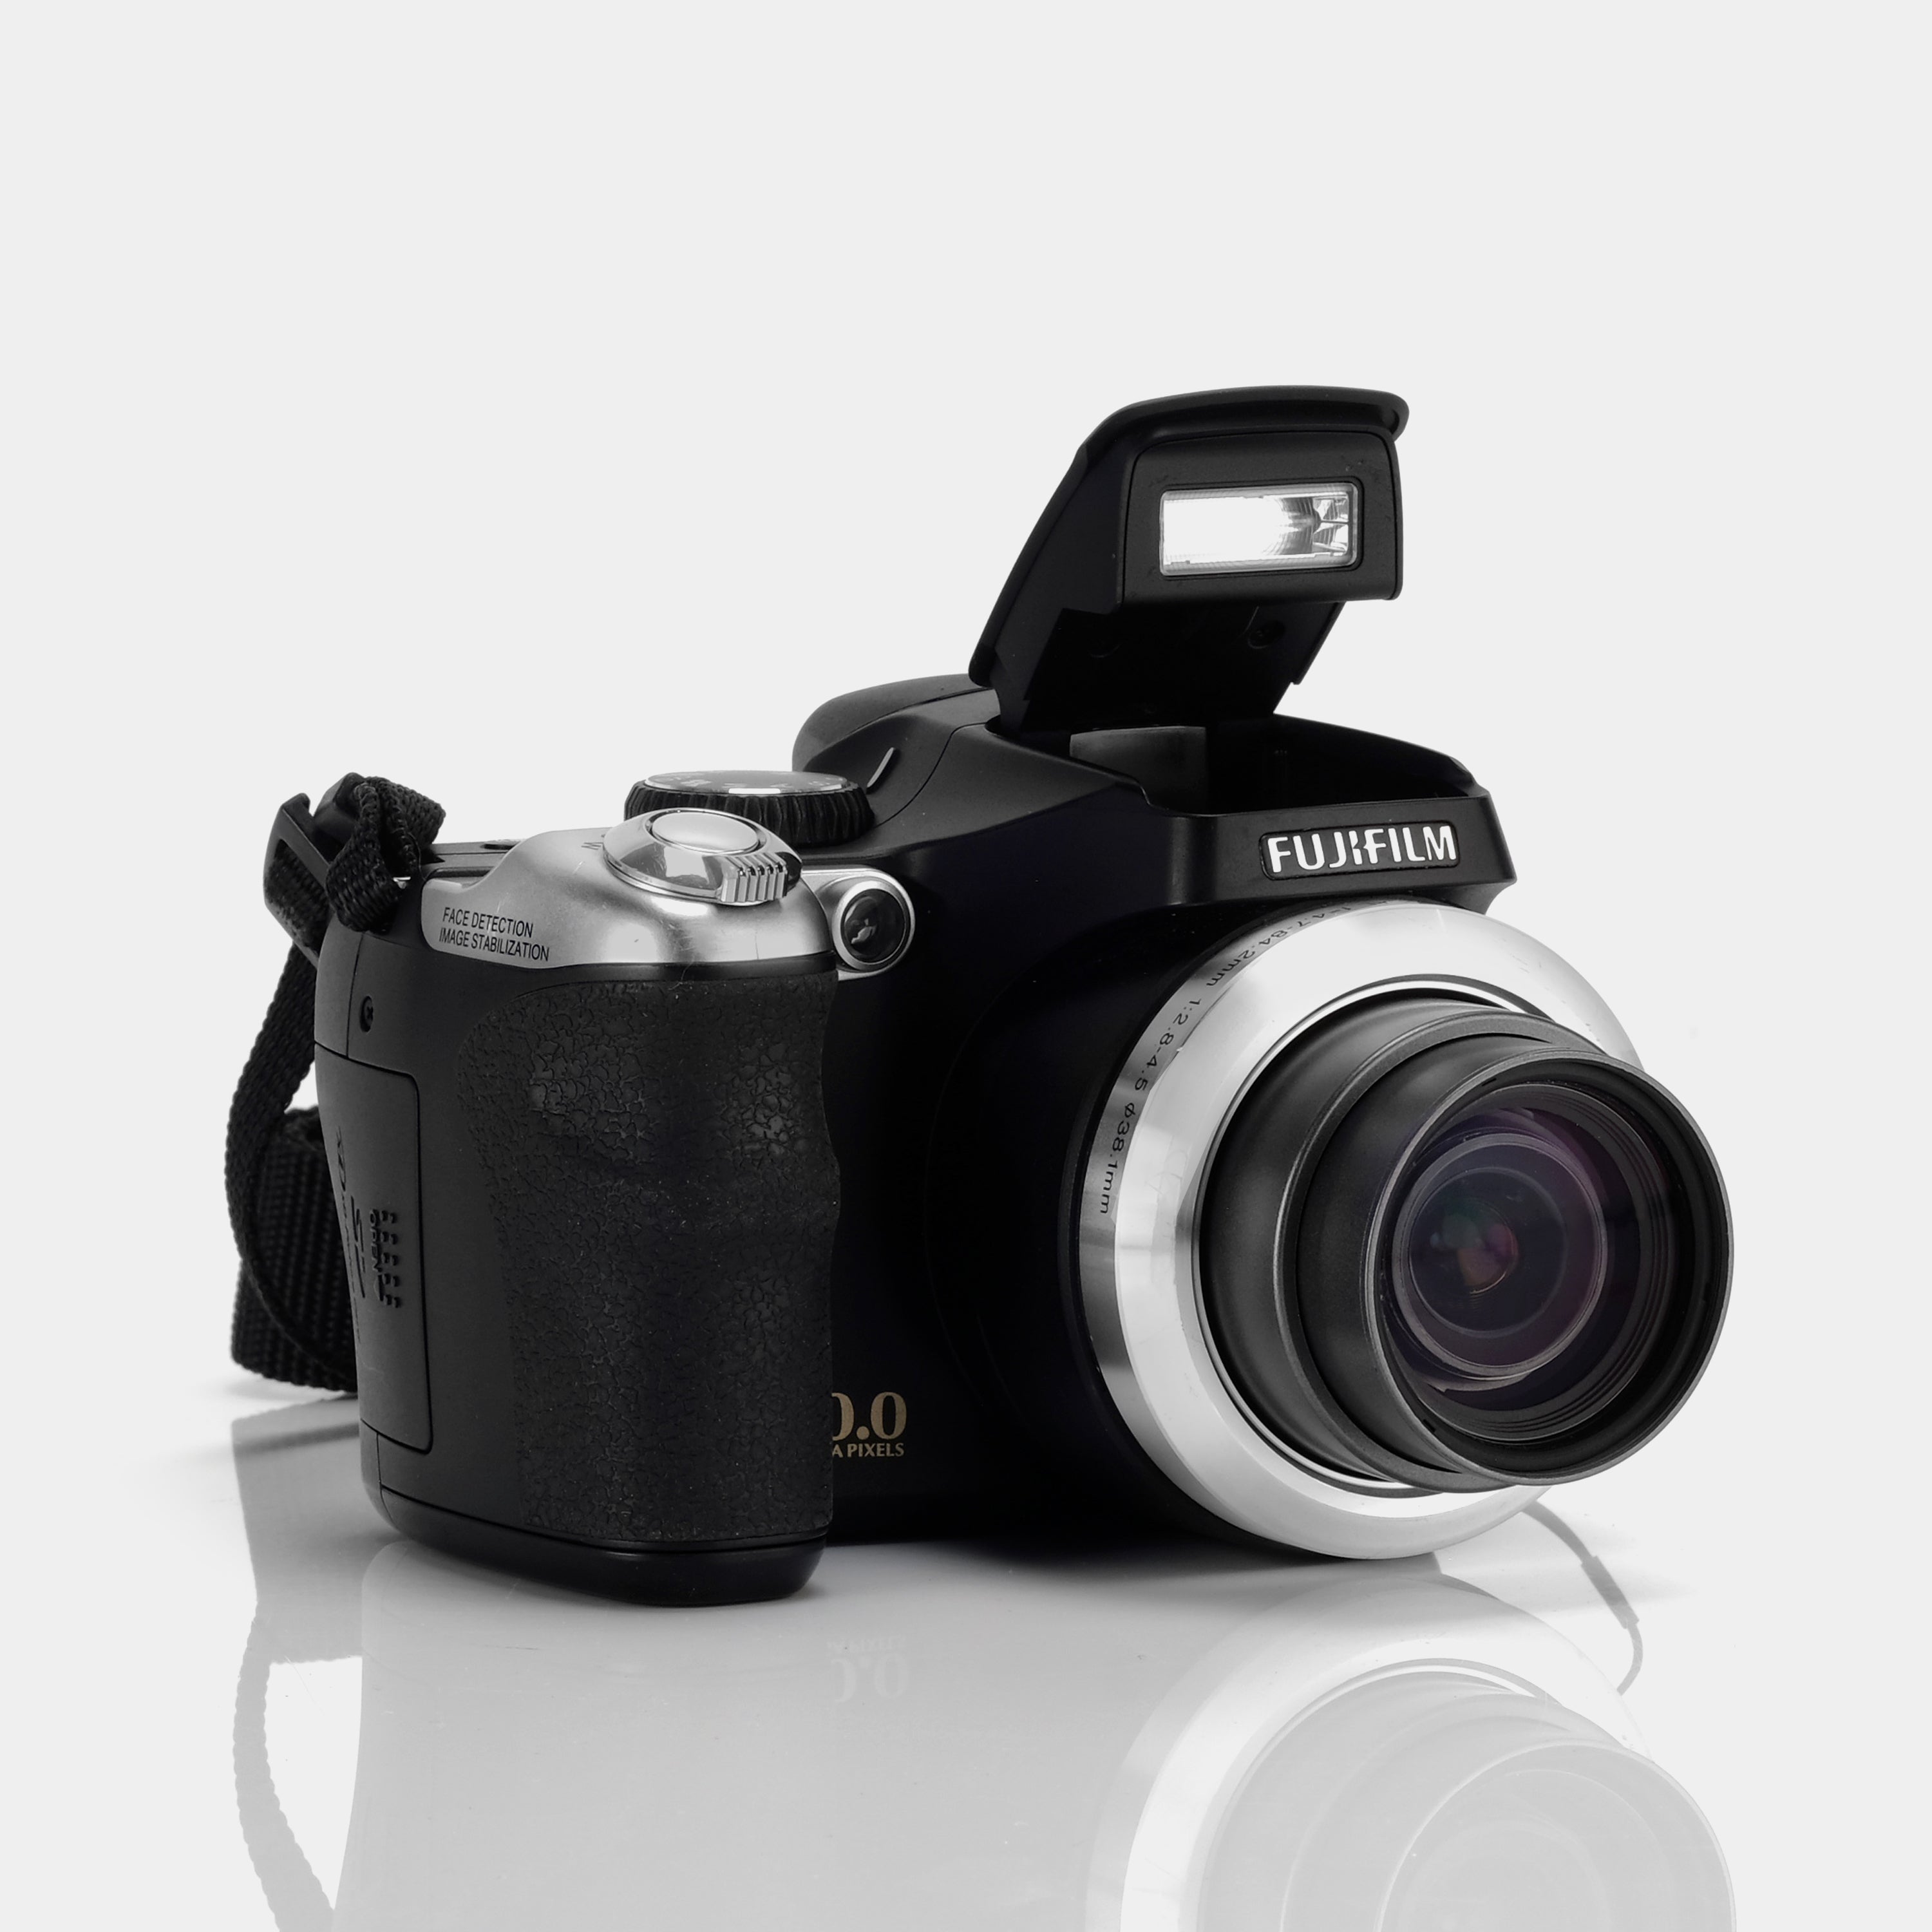 Nebu Tien jaar Bevestigen aan Fujifilm FinePix S8100fd Point and Shoot Digital Camera